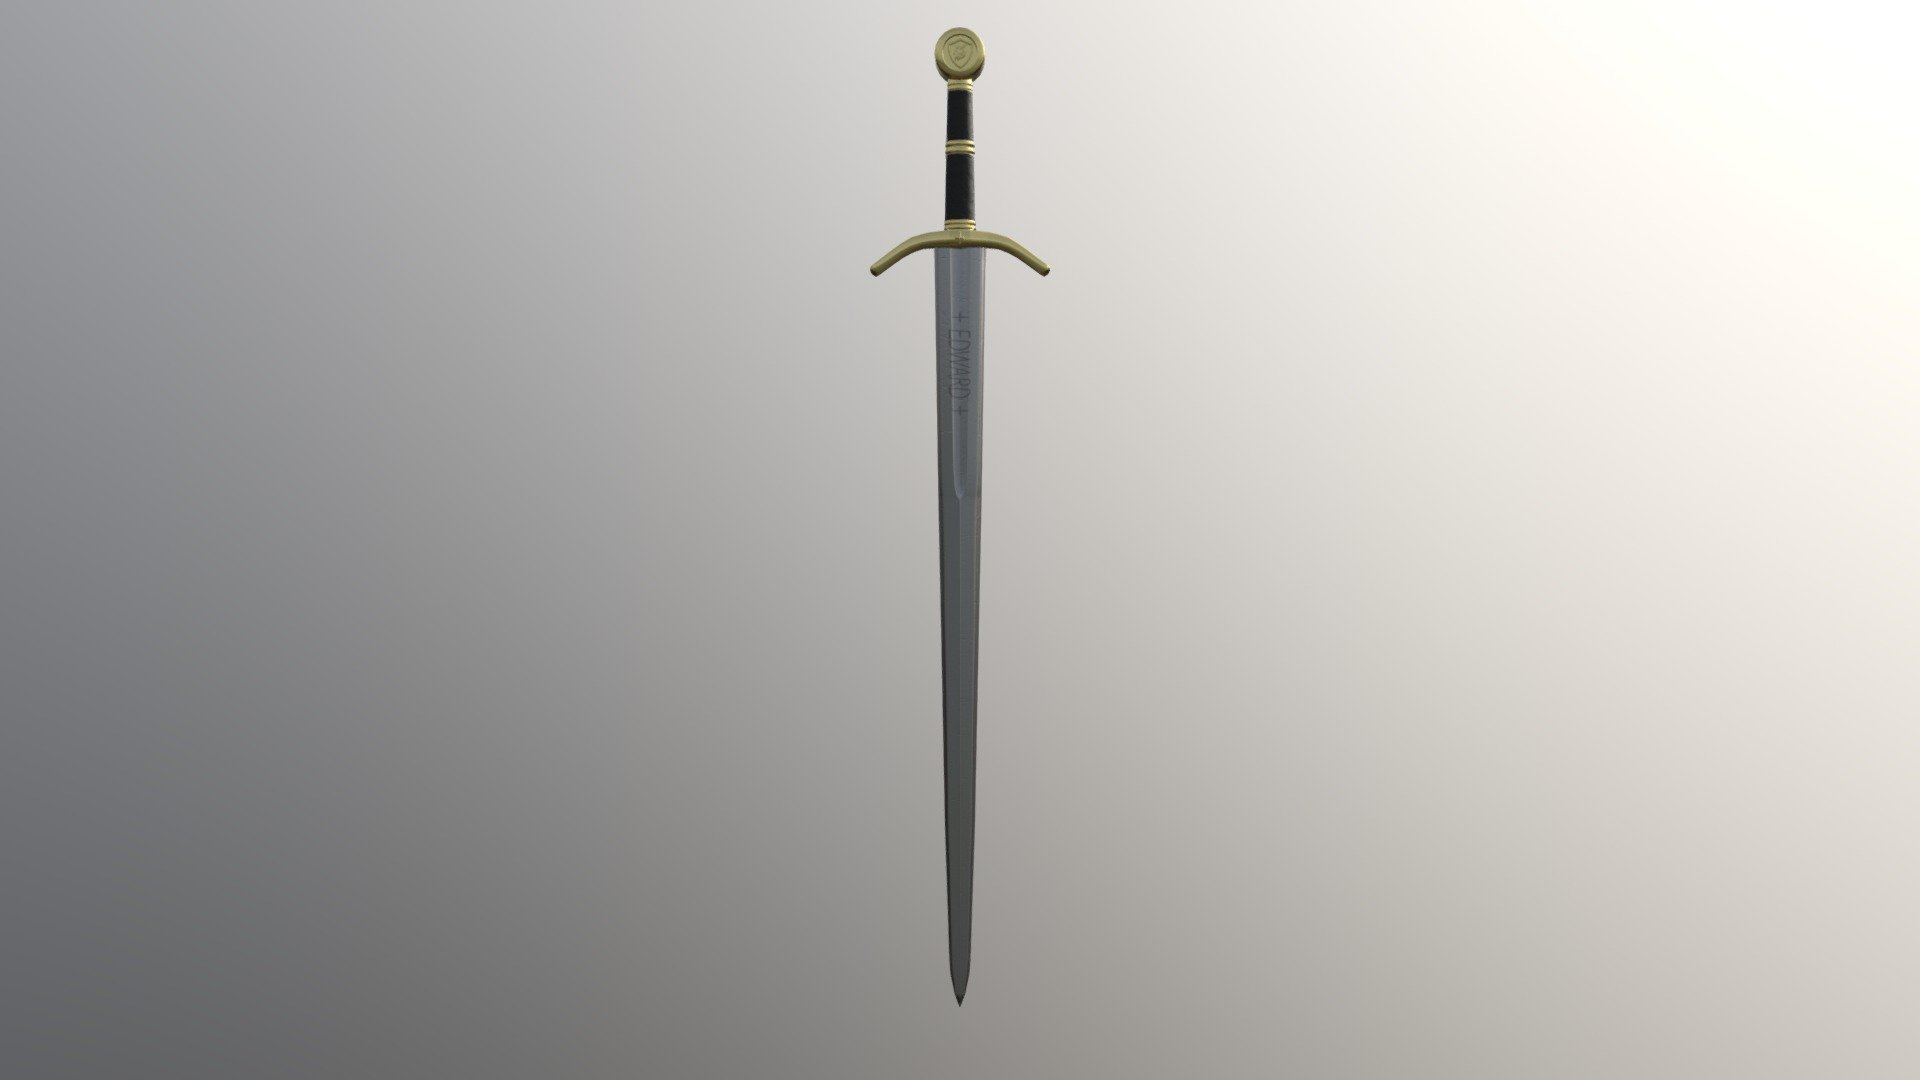 Edward's Sword